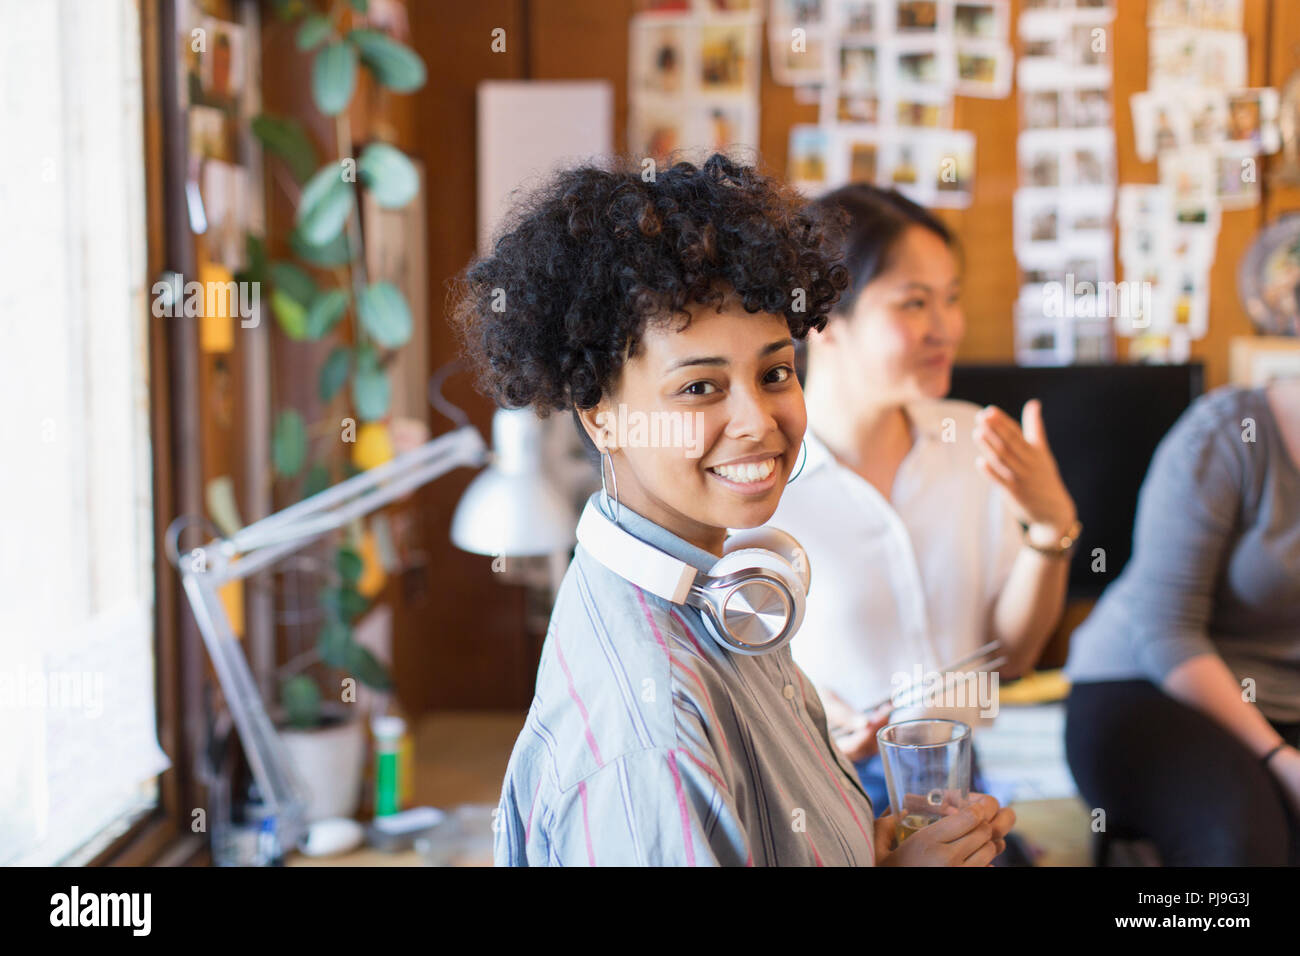 Portrait smiling, confident creative businesswoman with headphones in office Stock Photo